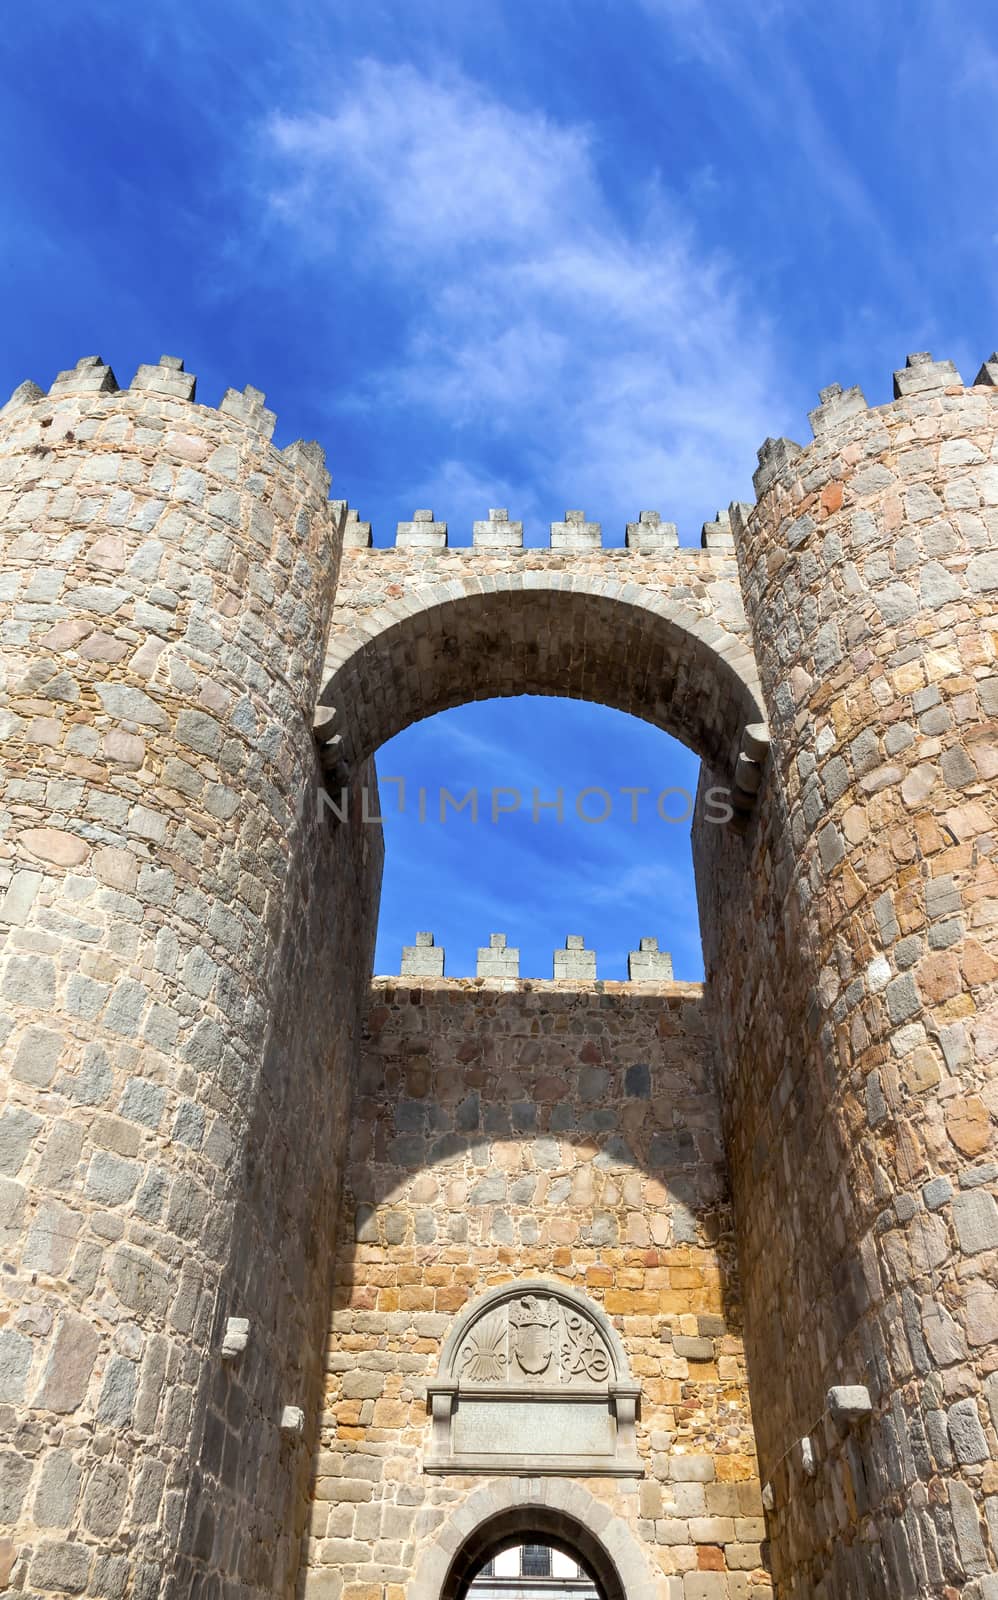 Avila Castle Town Walls Arch Gate Cityscape Castile Spain by bill_perry